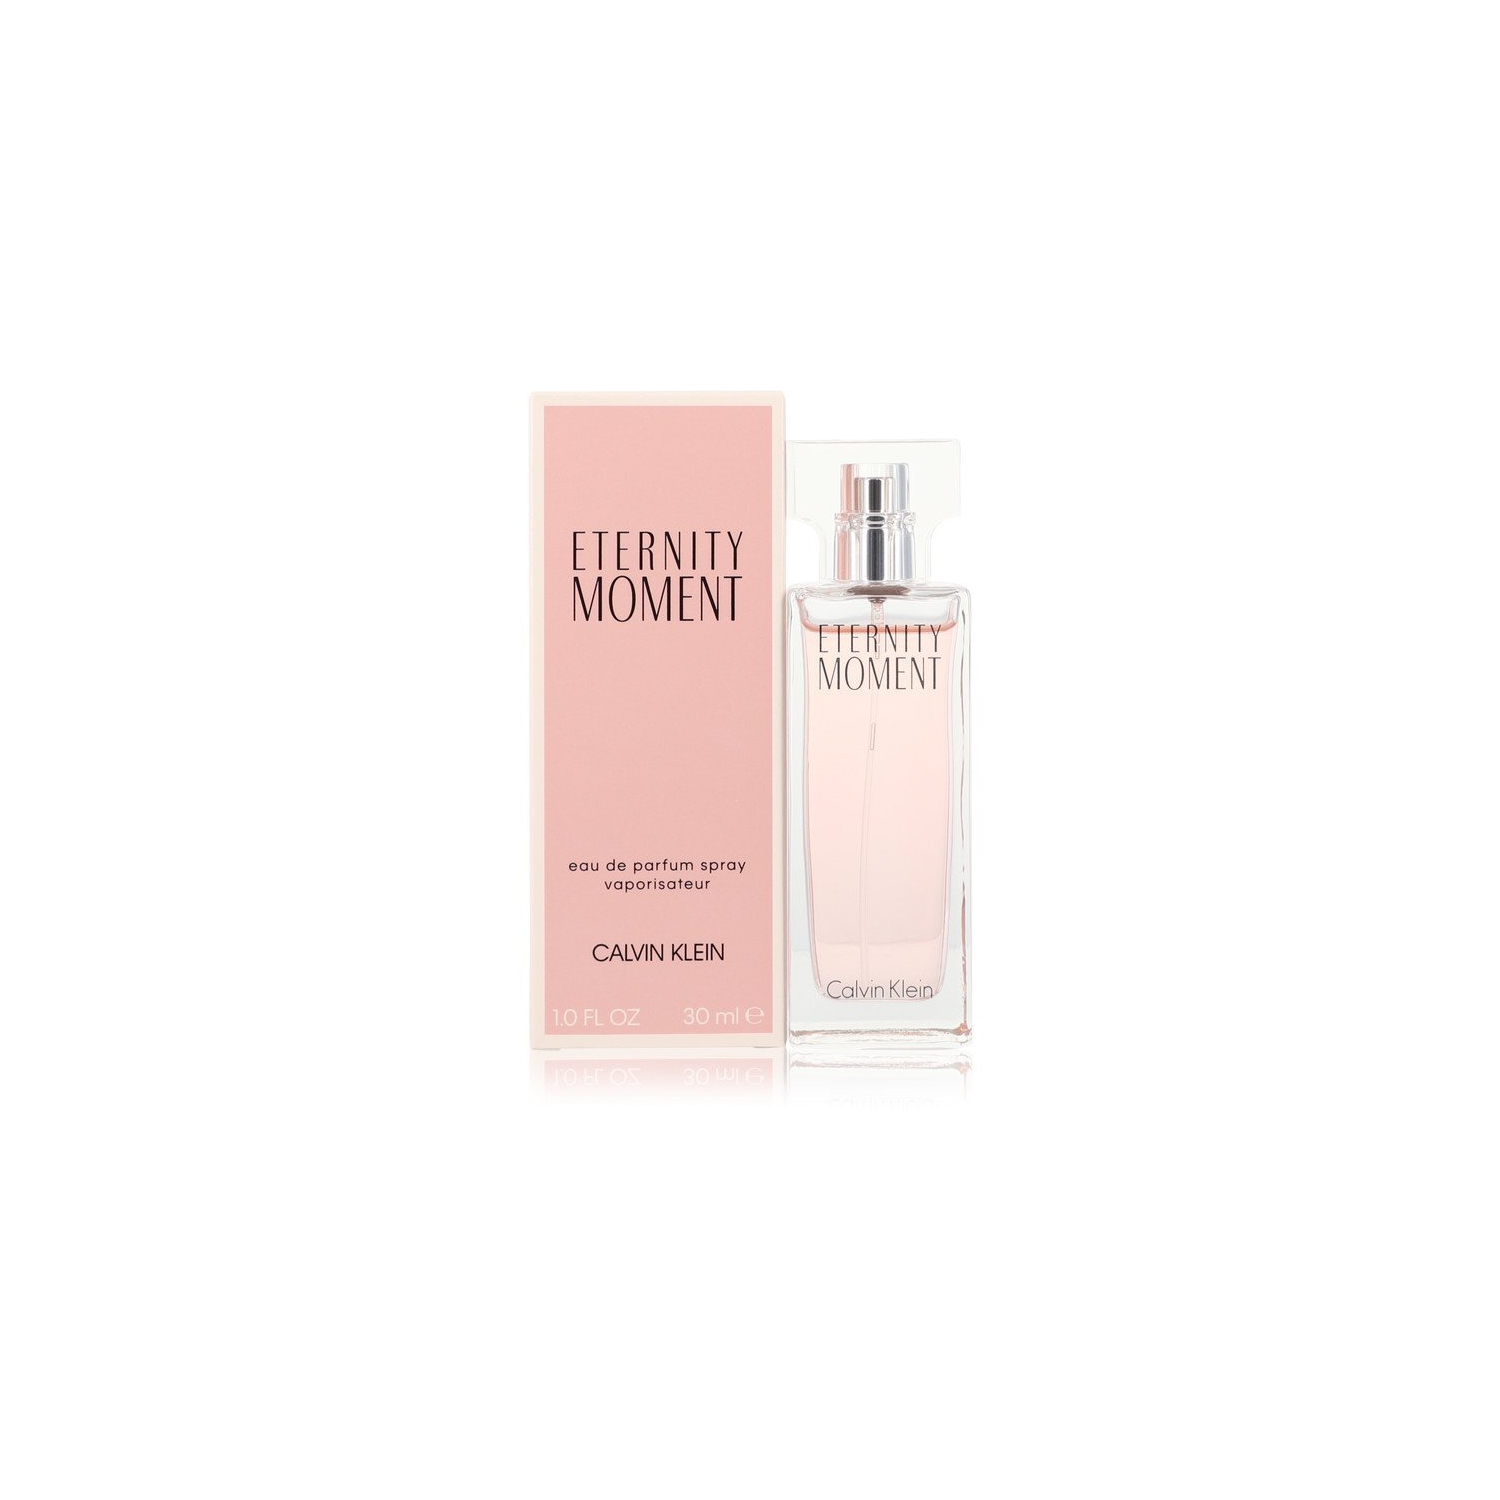 Eternity Moment by Calvin Klein Eau De Parfum Spray 1 oz (Women)